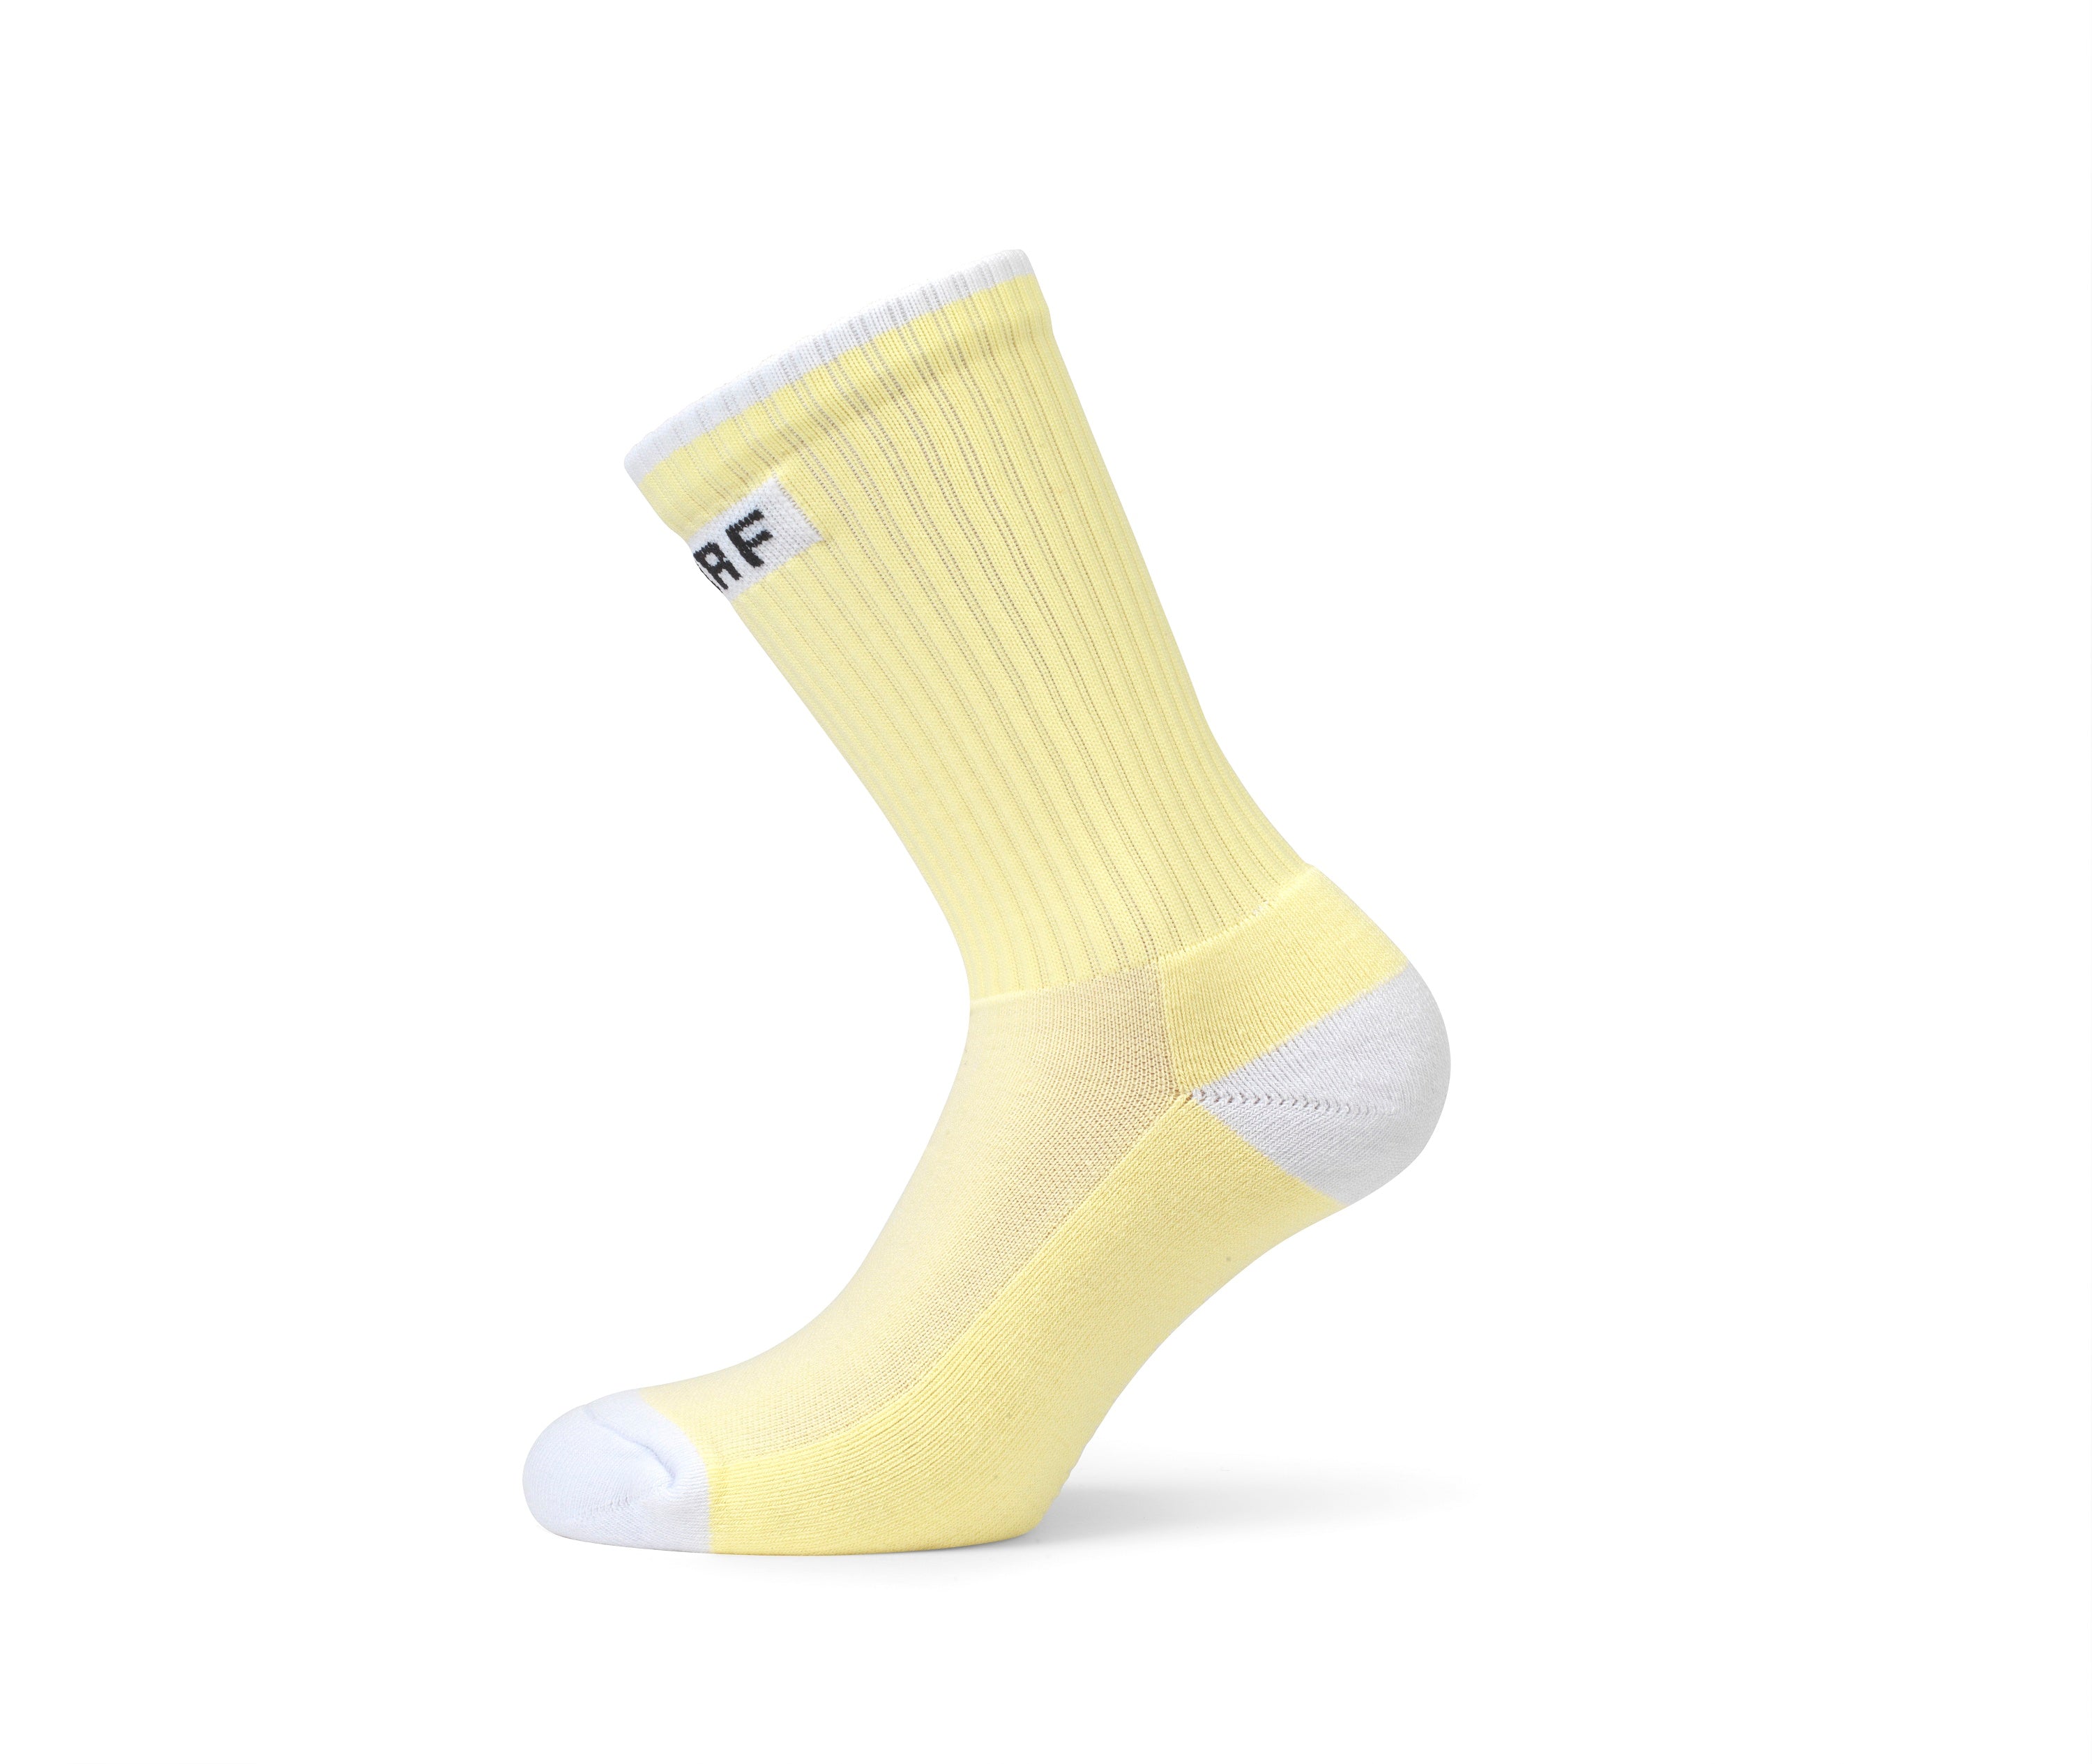 TURF Socks (Lemon Yellow) - Small